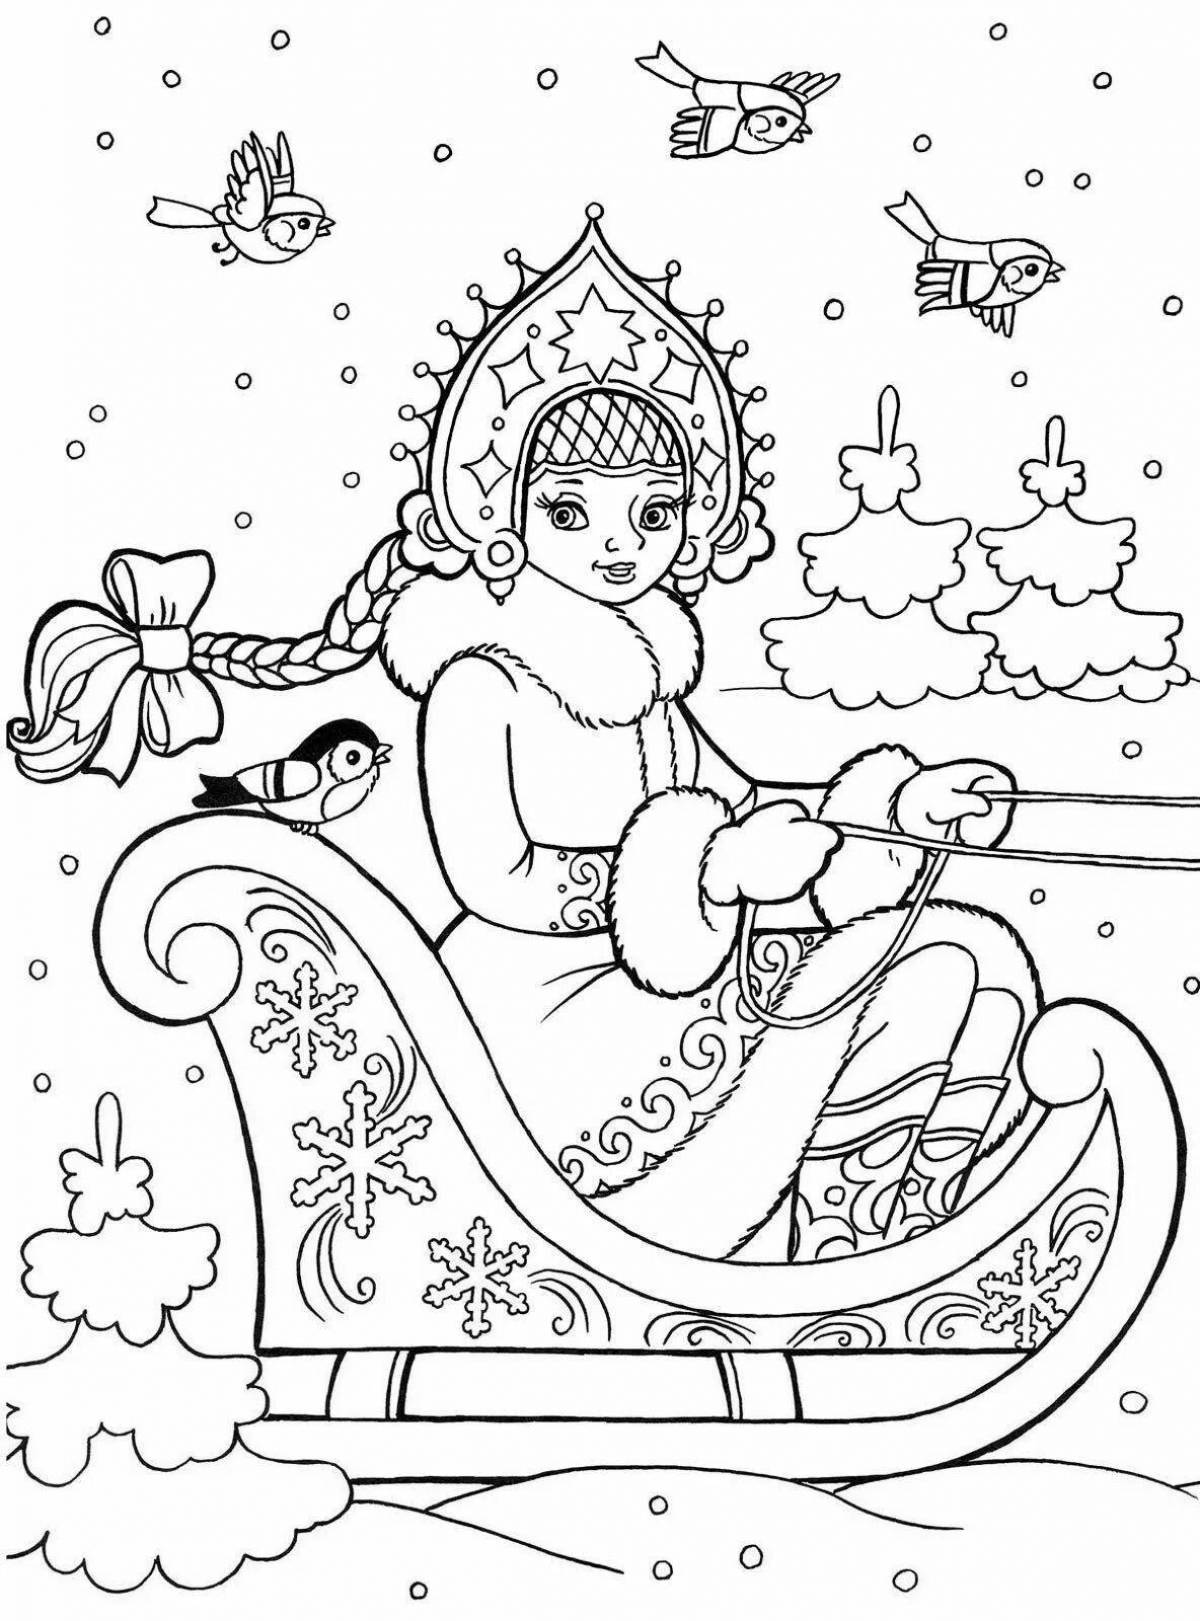 Snow Maiden coloring book